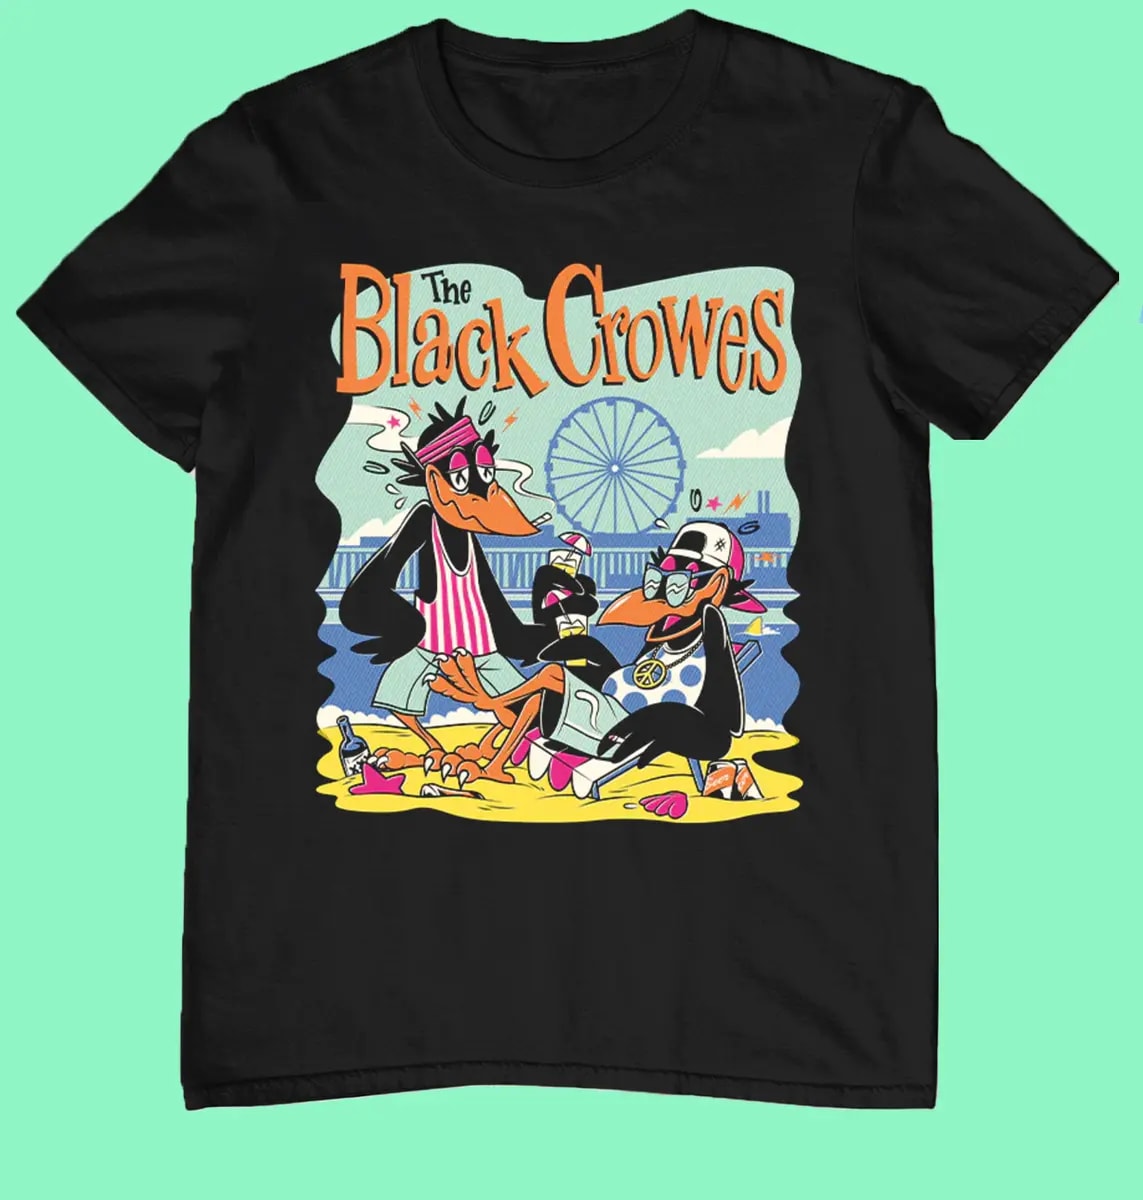 The Black Crowes World Tour Band Member Unisex Shirt Enbp11.jpg